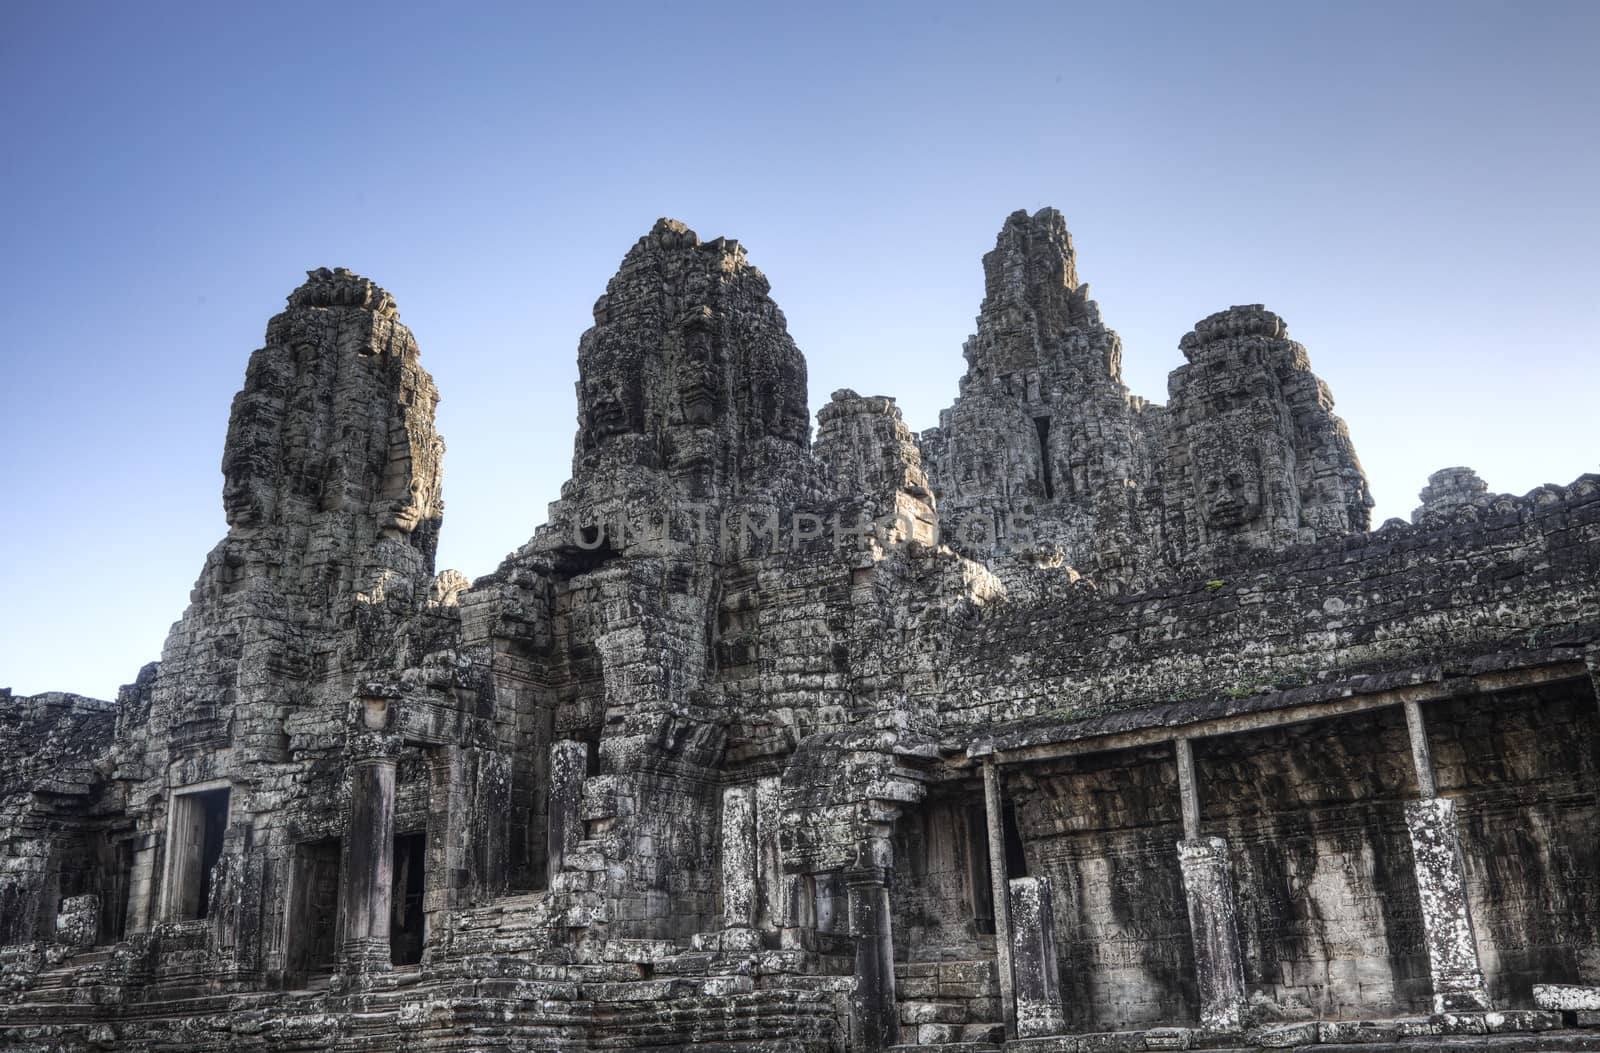 Bayon temple in Angkor Cambodia by ldambies